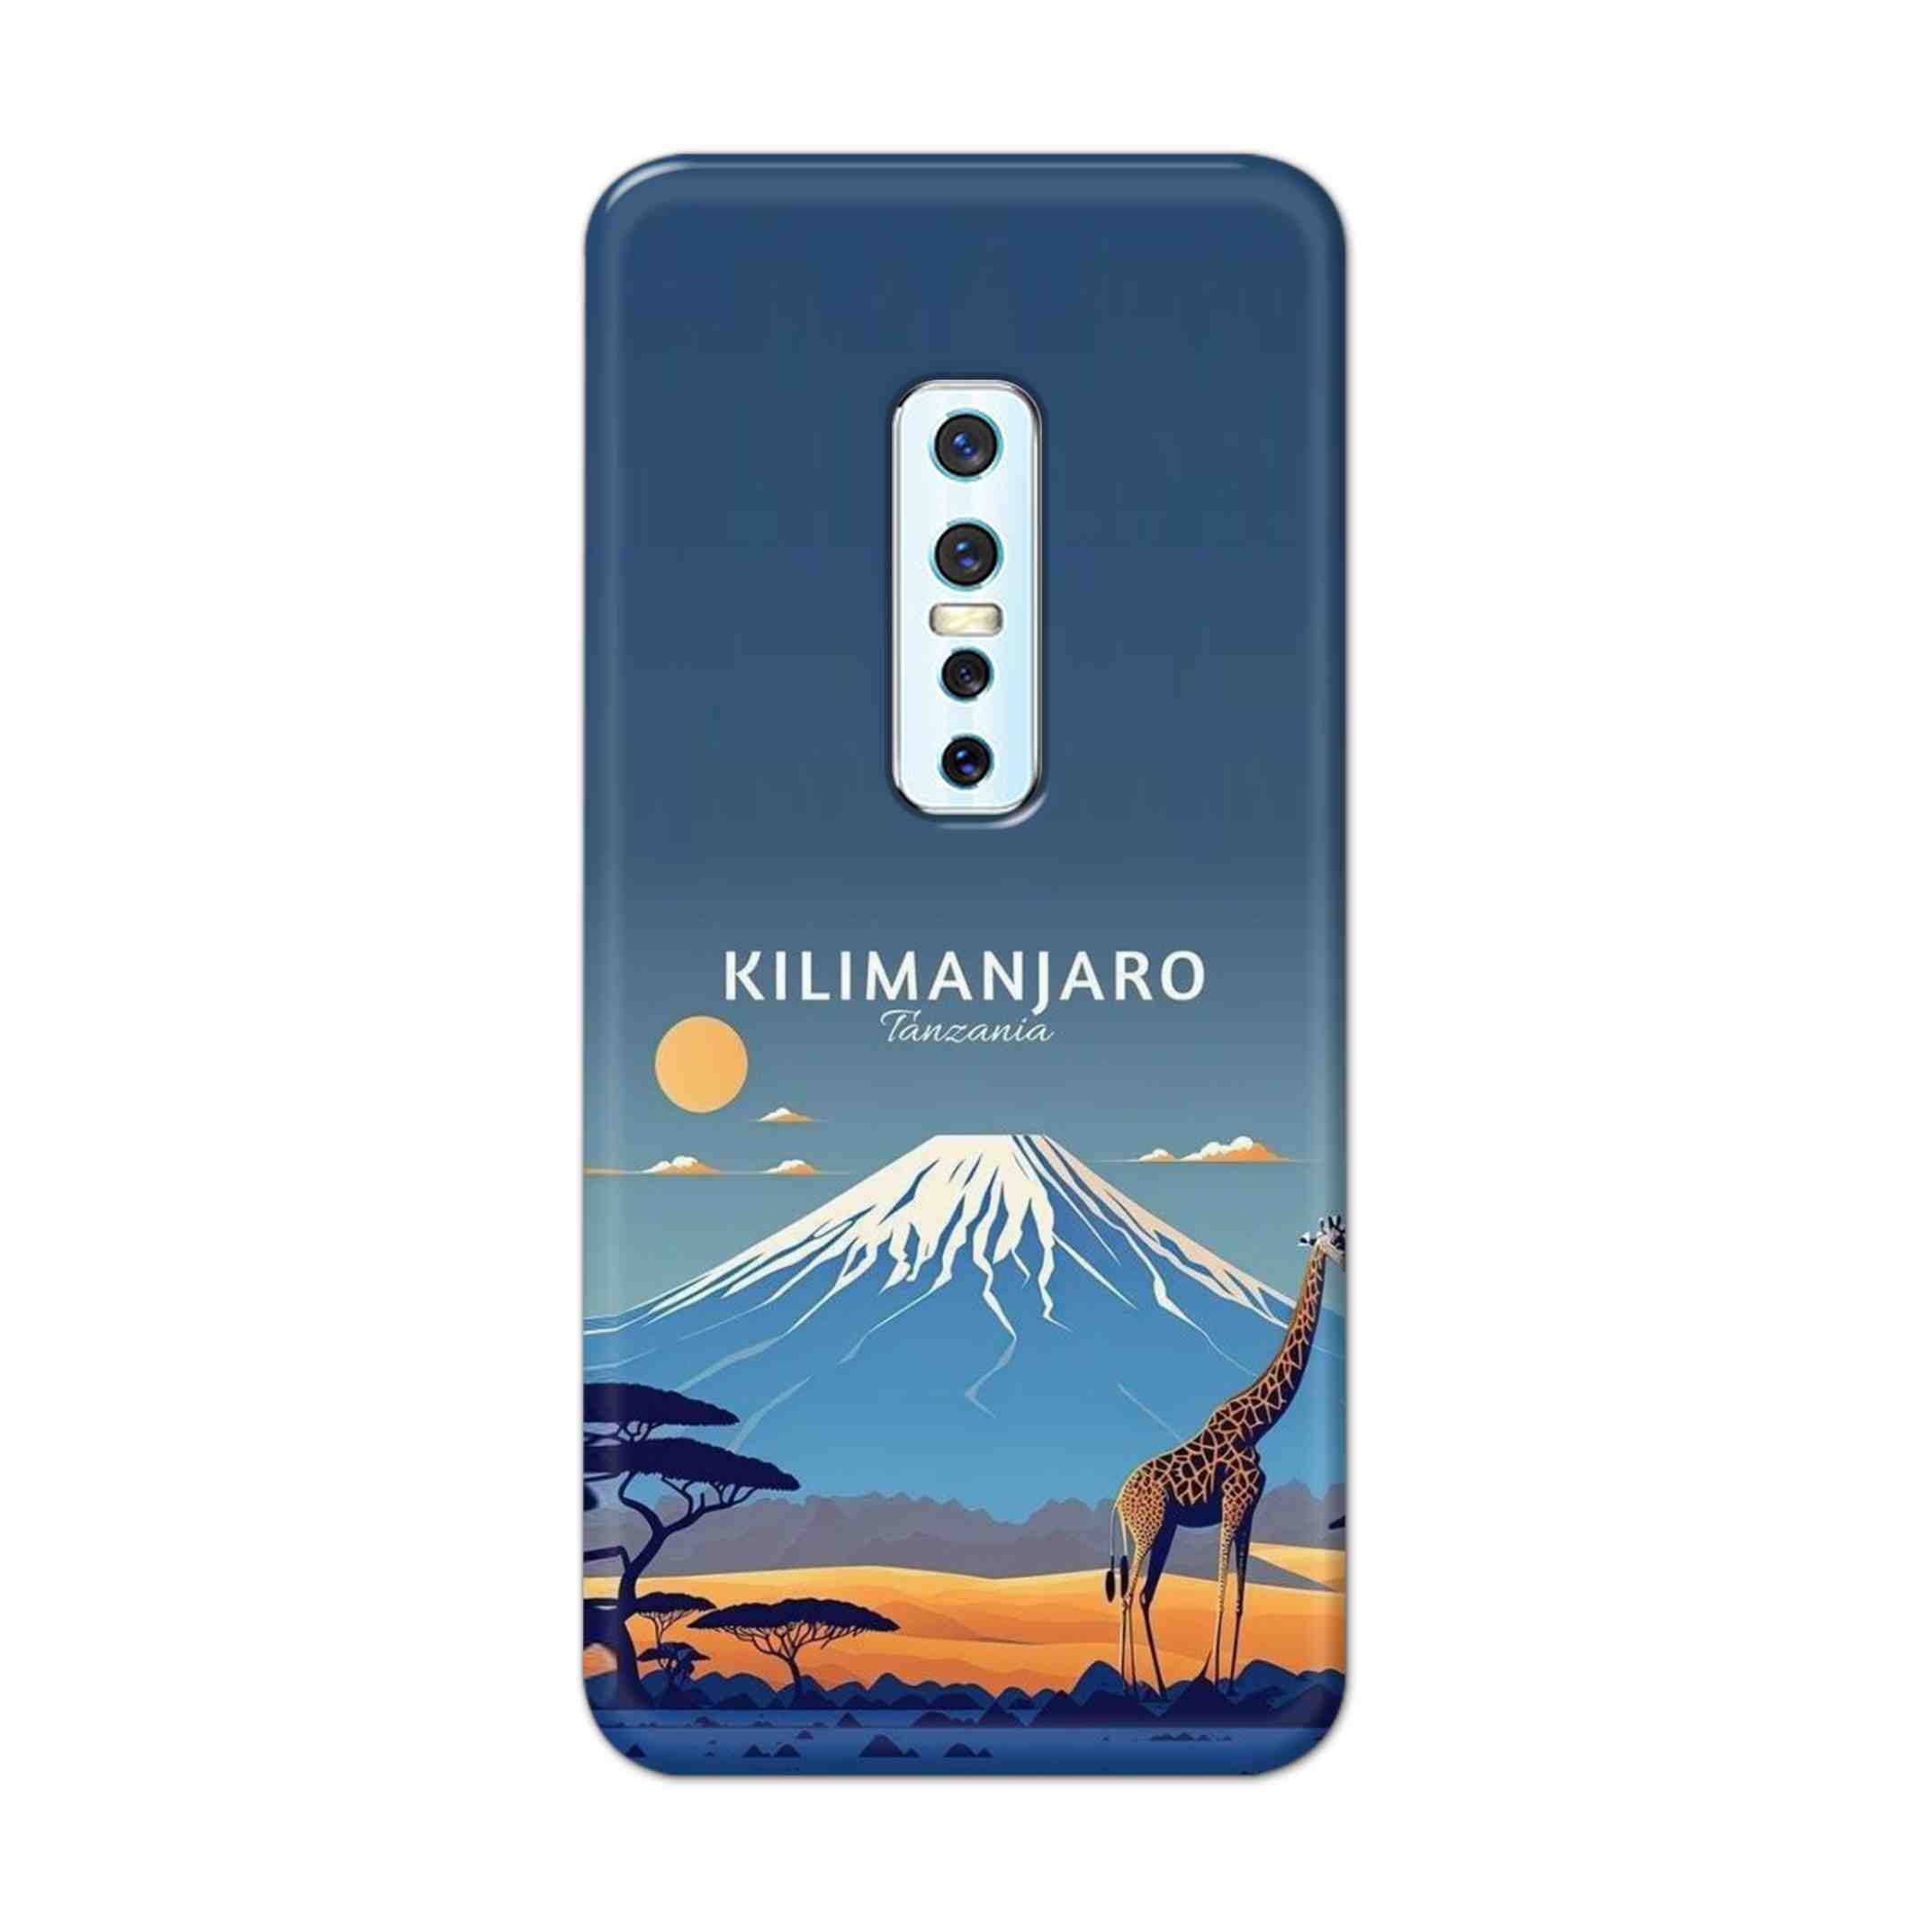 Buy Kilimanjaro Hard Back Mobile Phone Case Cover For Vivo V17 Pro Online